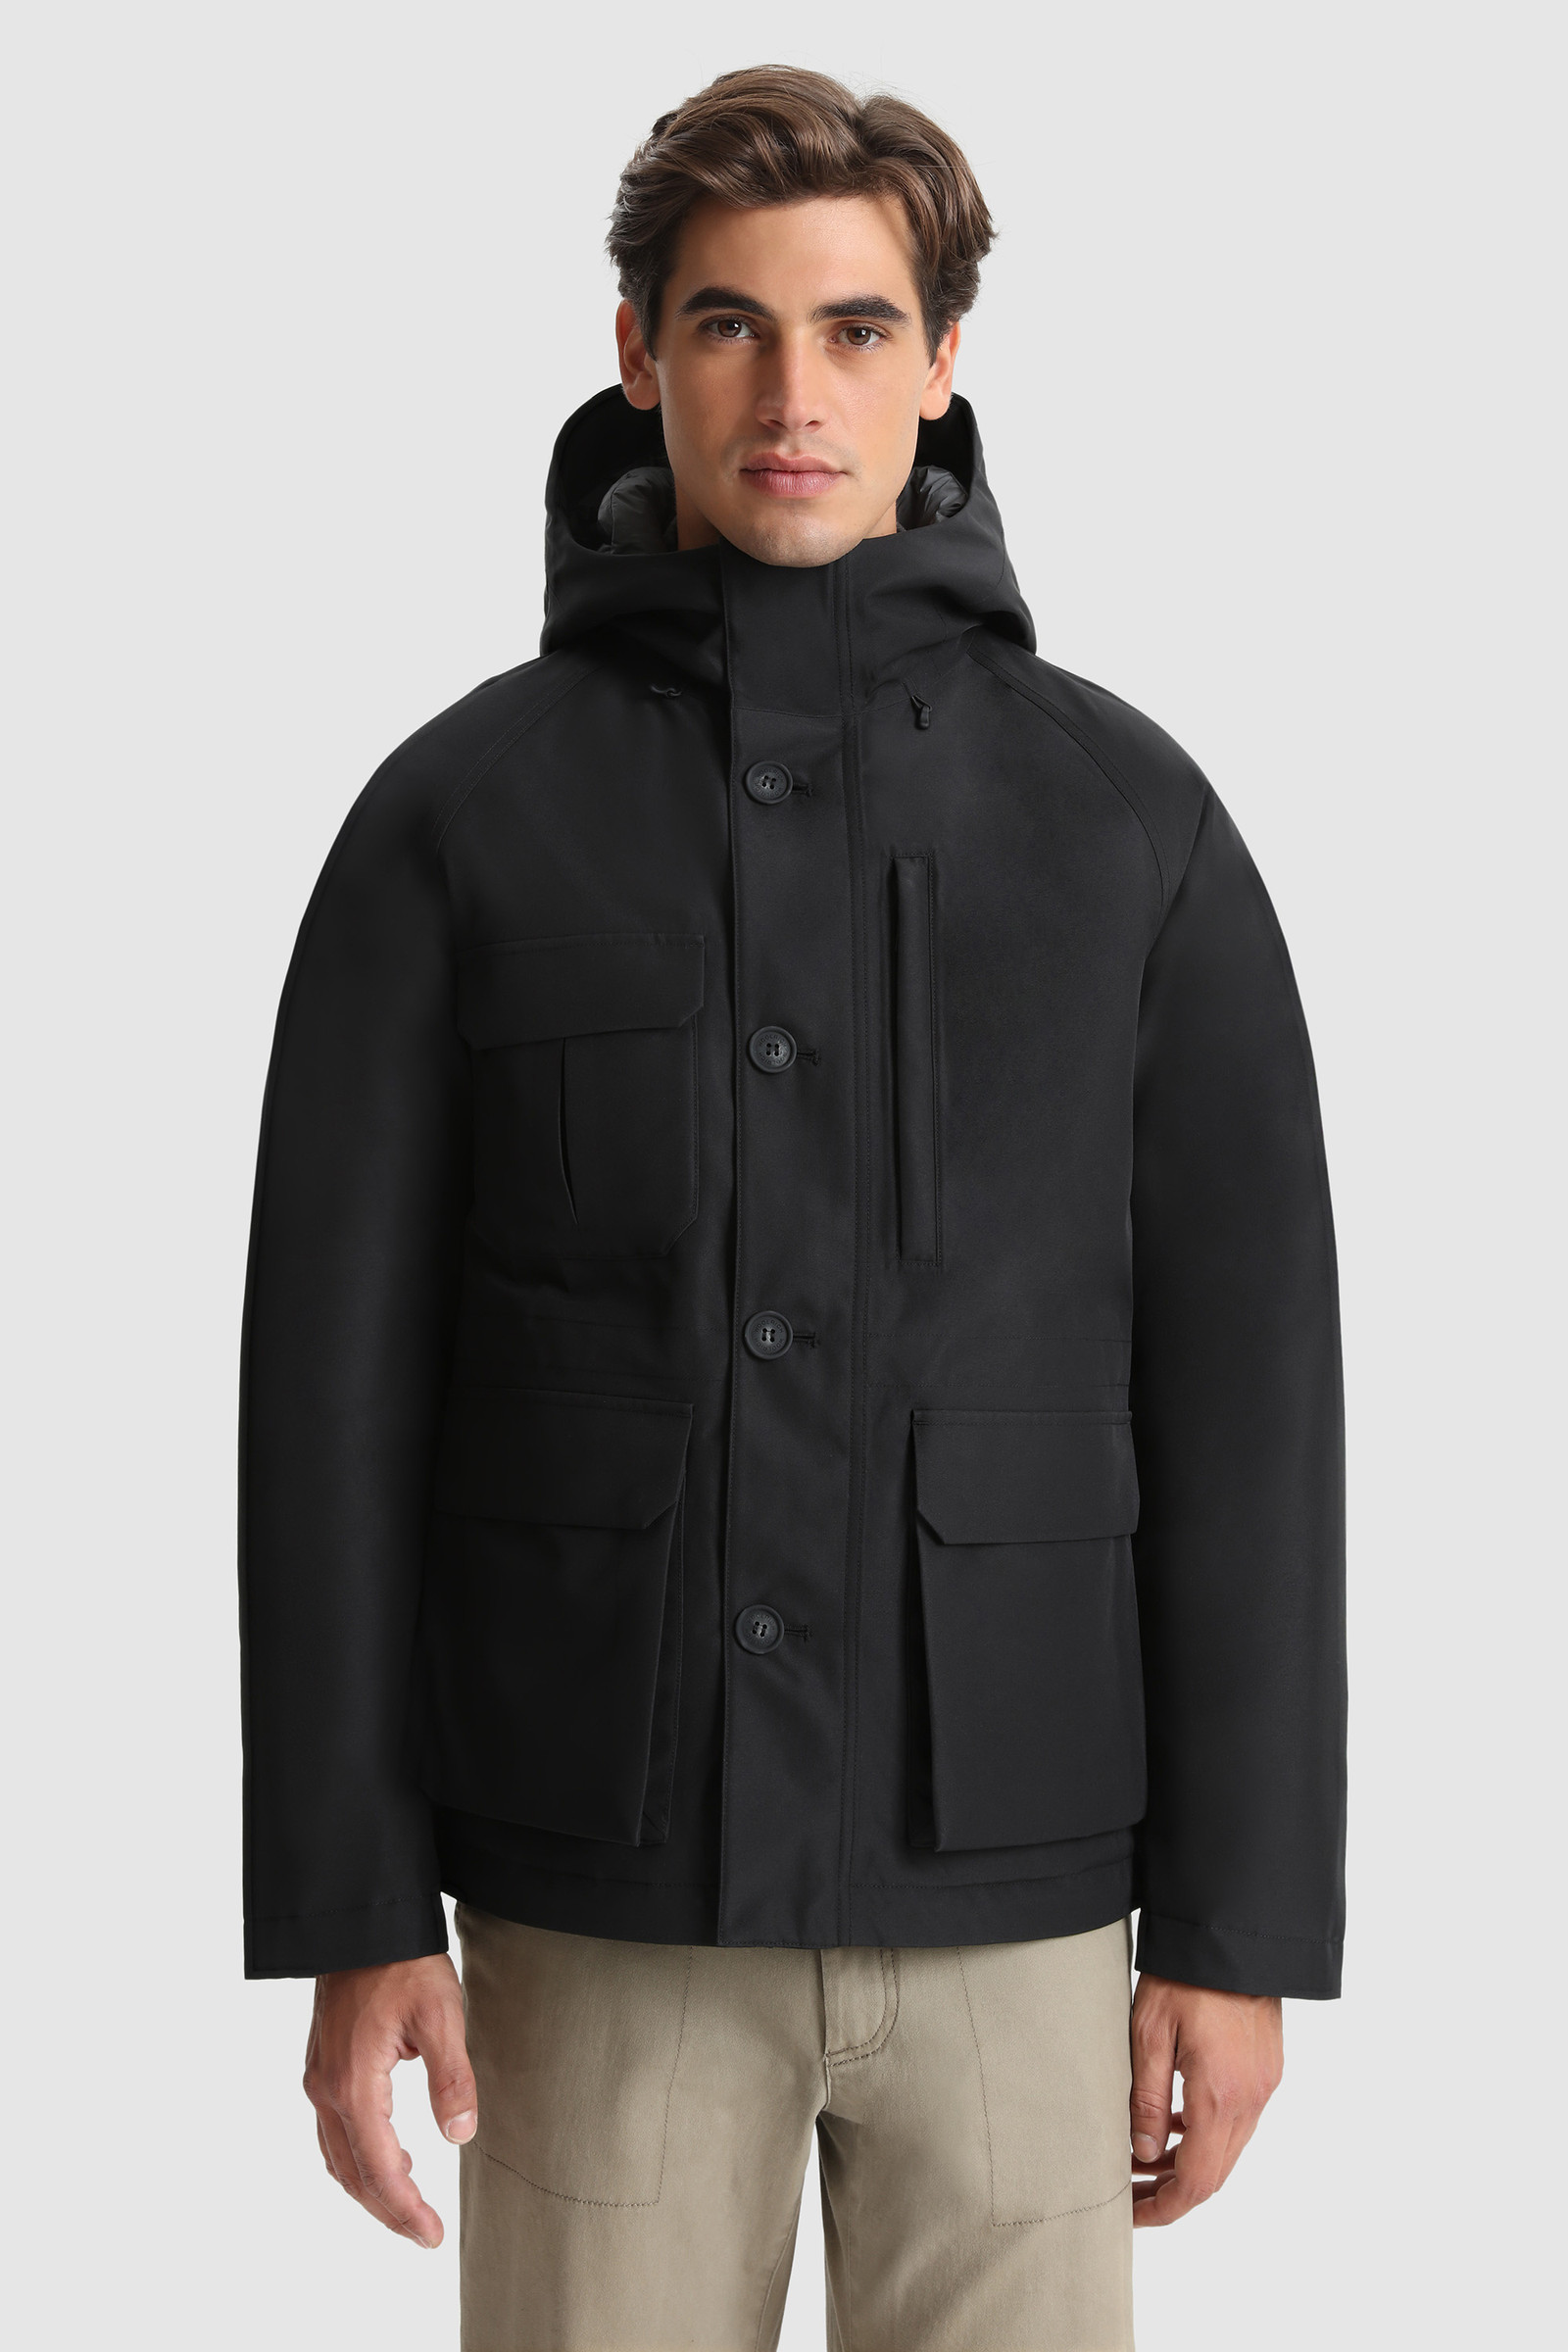 Men's Gore-Tex Mountain Jacket Black | Woolrich USA